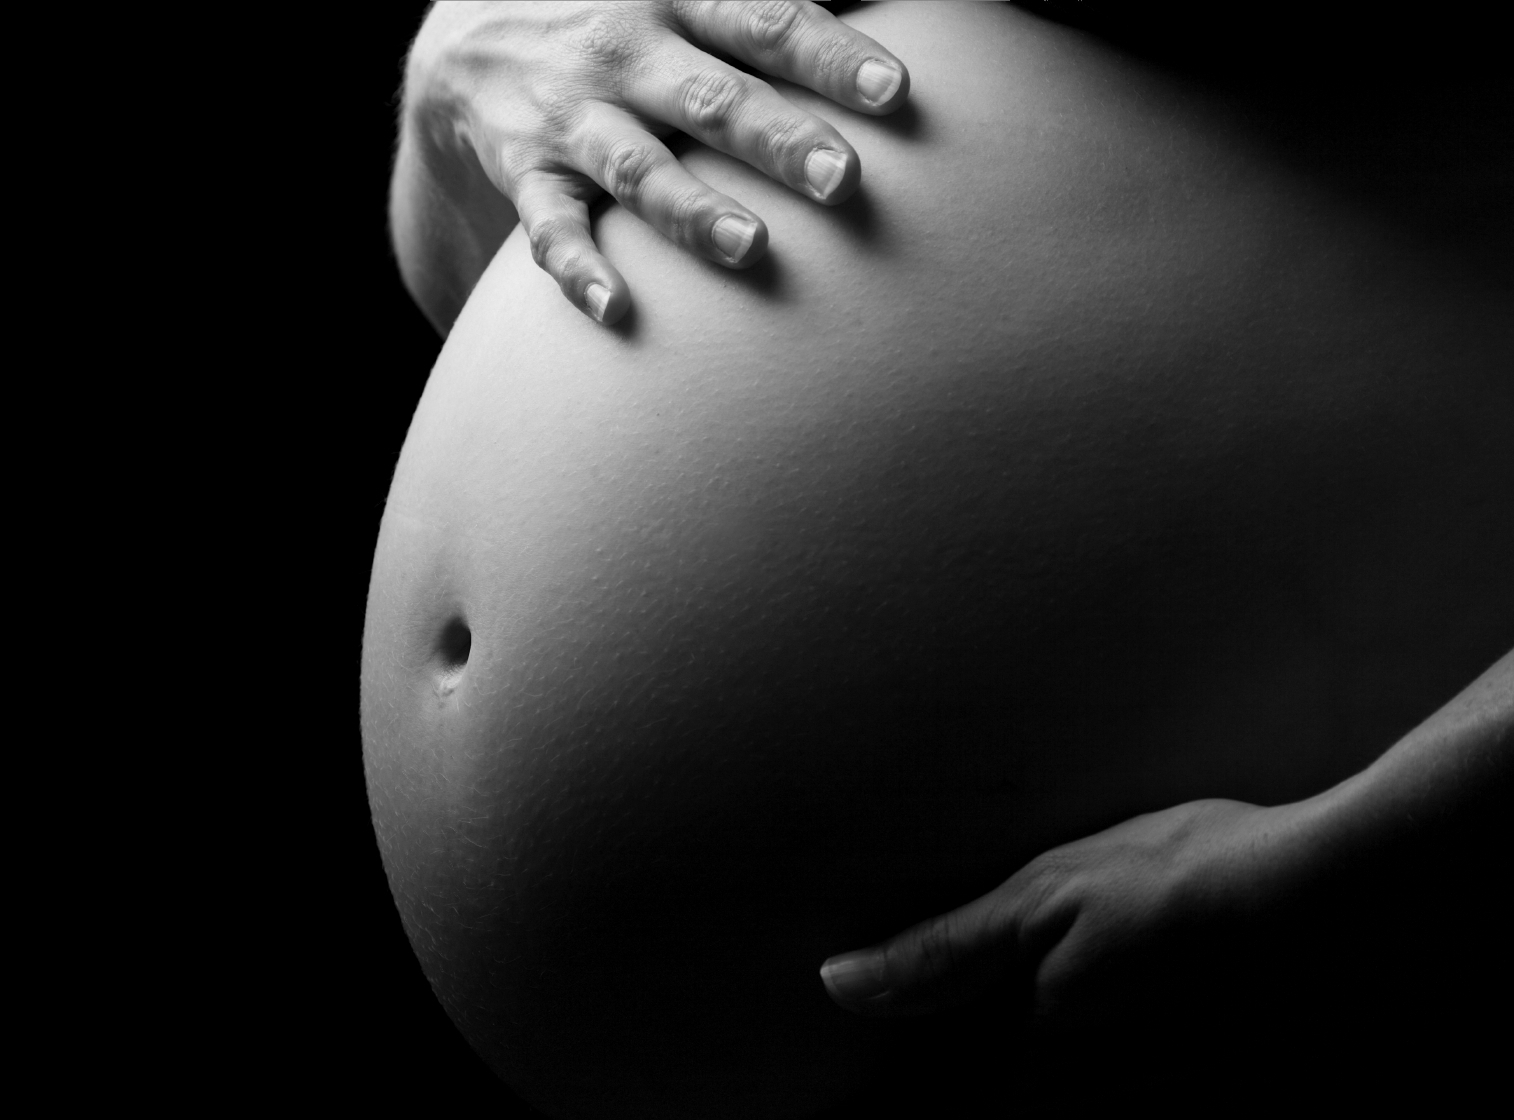 Chlamydia in timpul sarcinii: cum protejăm copilul